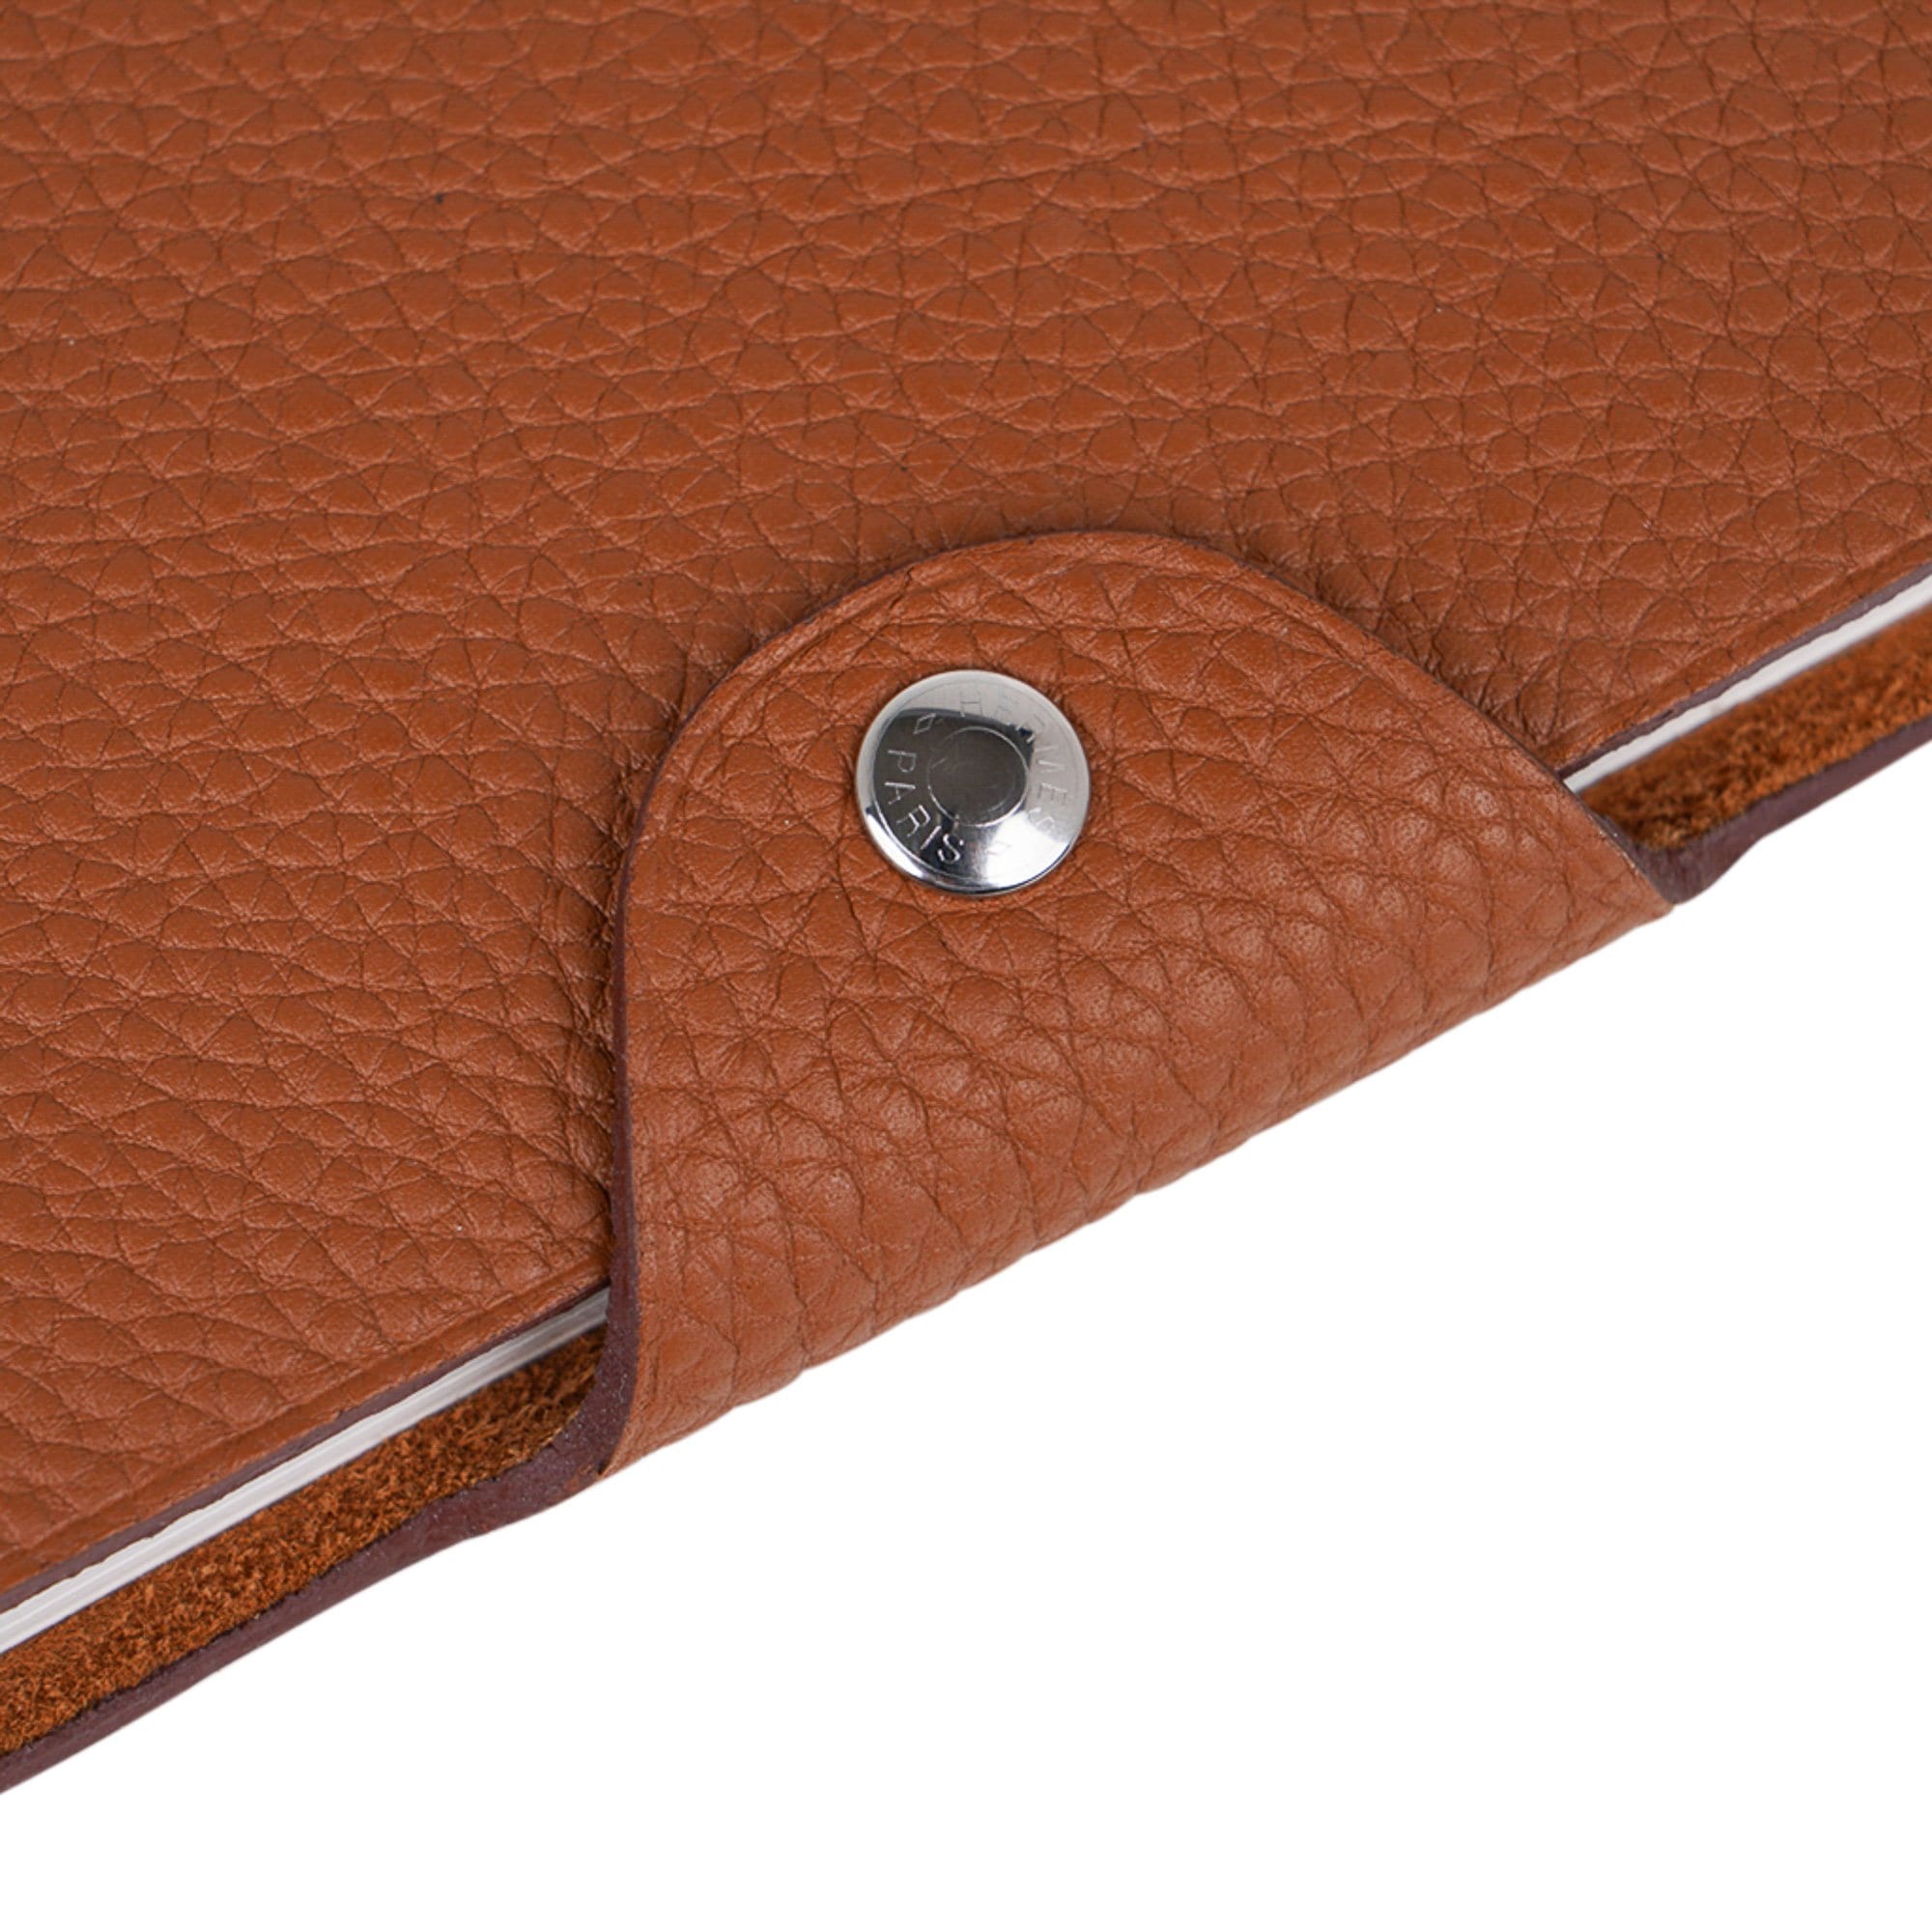 Louis Vuitton, Accessories, Louis Vuitton Notebook Cover Paul Mm Refill  Mm Brand New